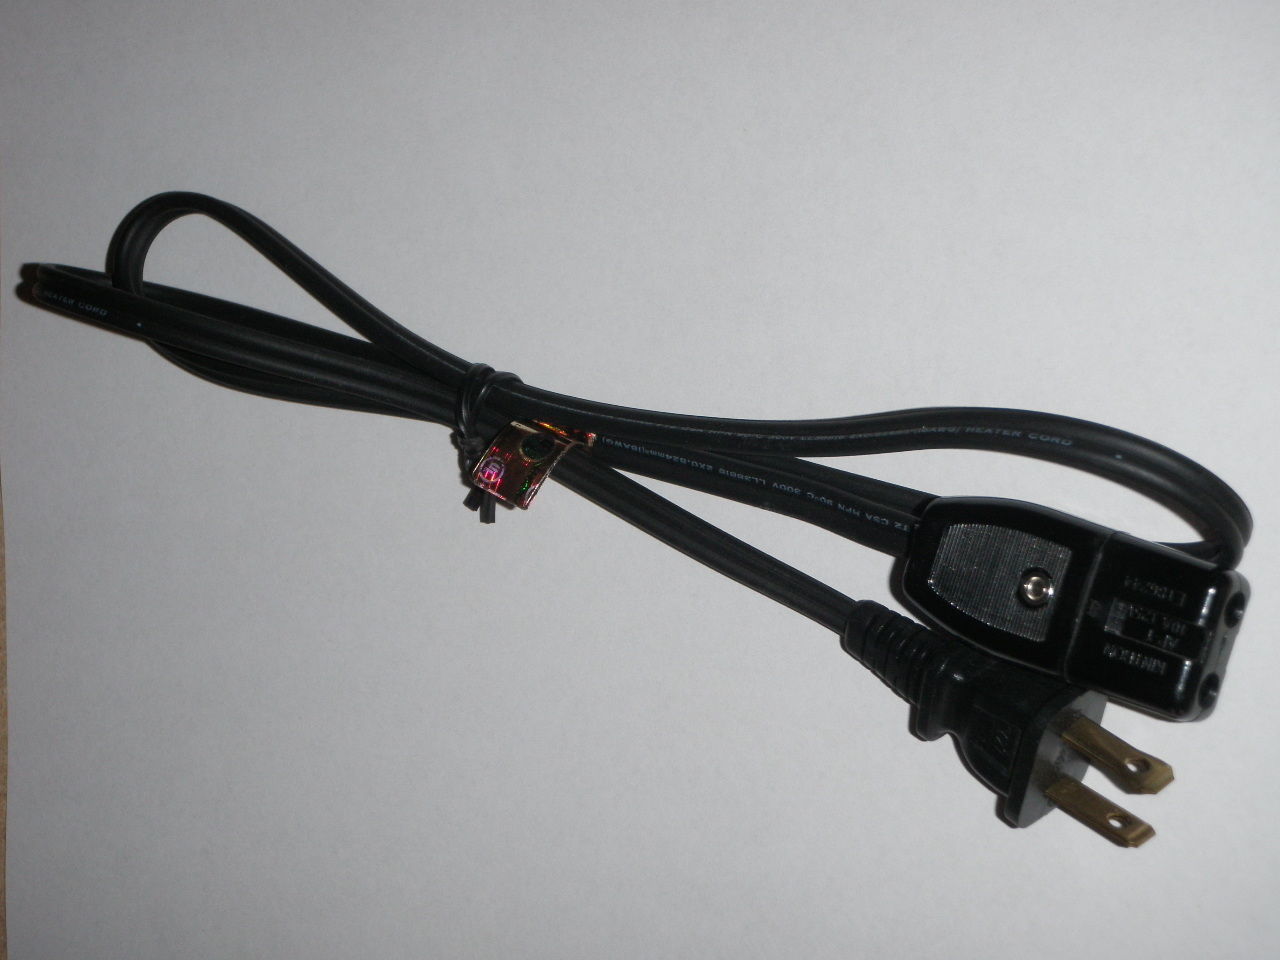 2pin Power Cord for Maxim Food Warming Tray Model WT-46 (Choose Length) WT-48 - $14.69 - $18.61